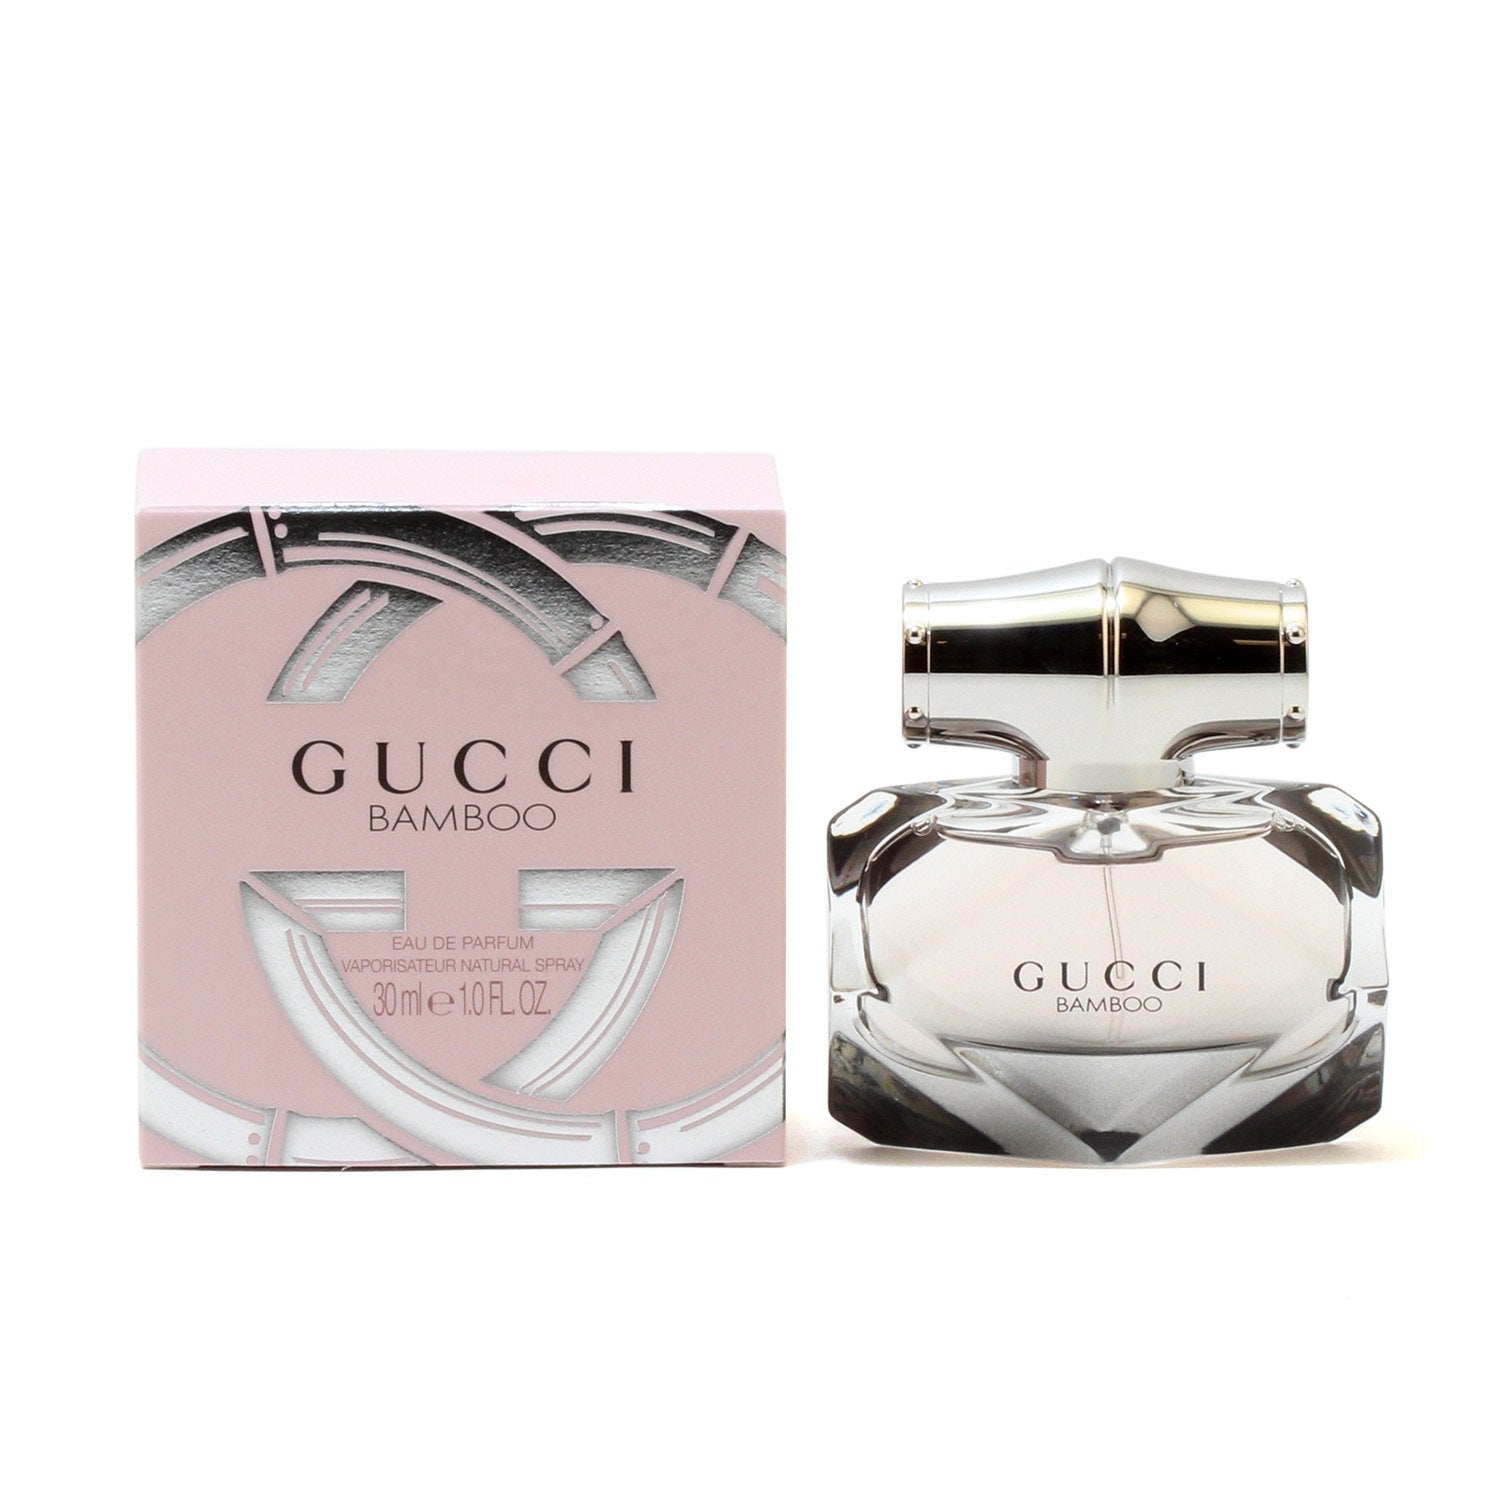 Perfume - GUCCI BAMBOO FOR WOMEN - EAU DE PARFUM SPRAY